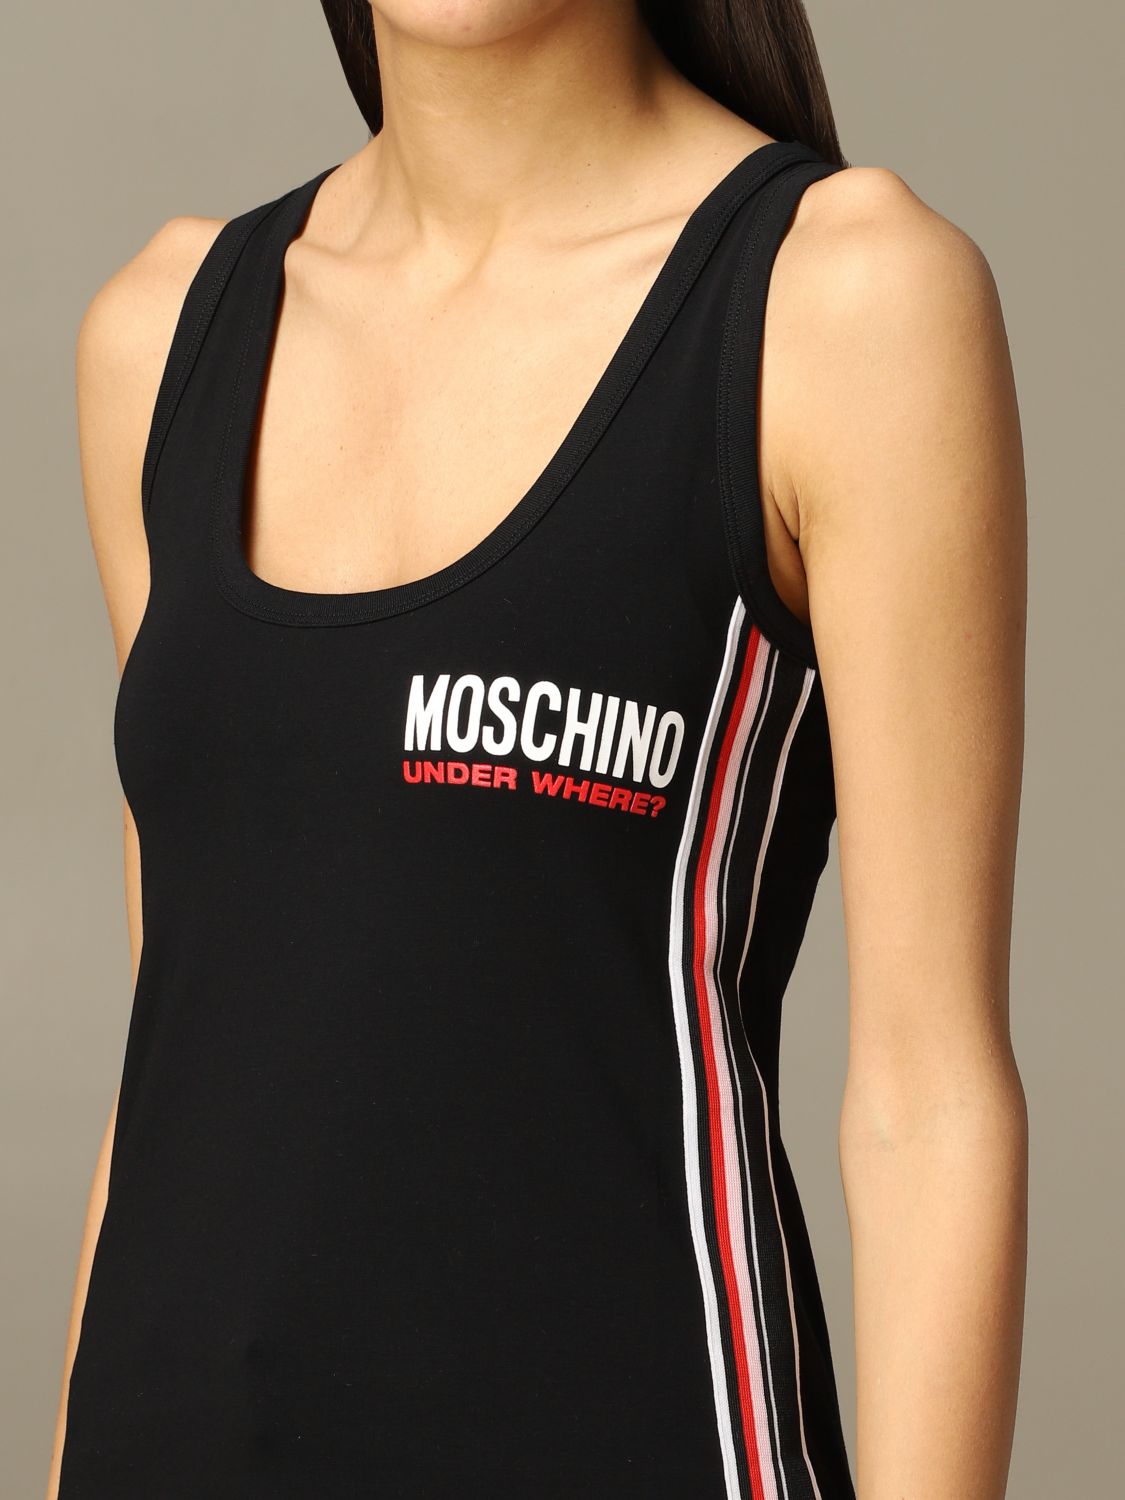 moschino vest top womens